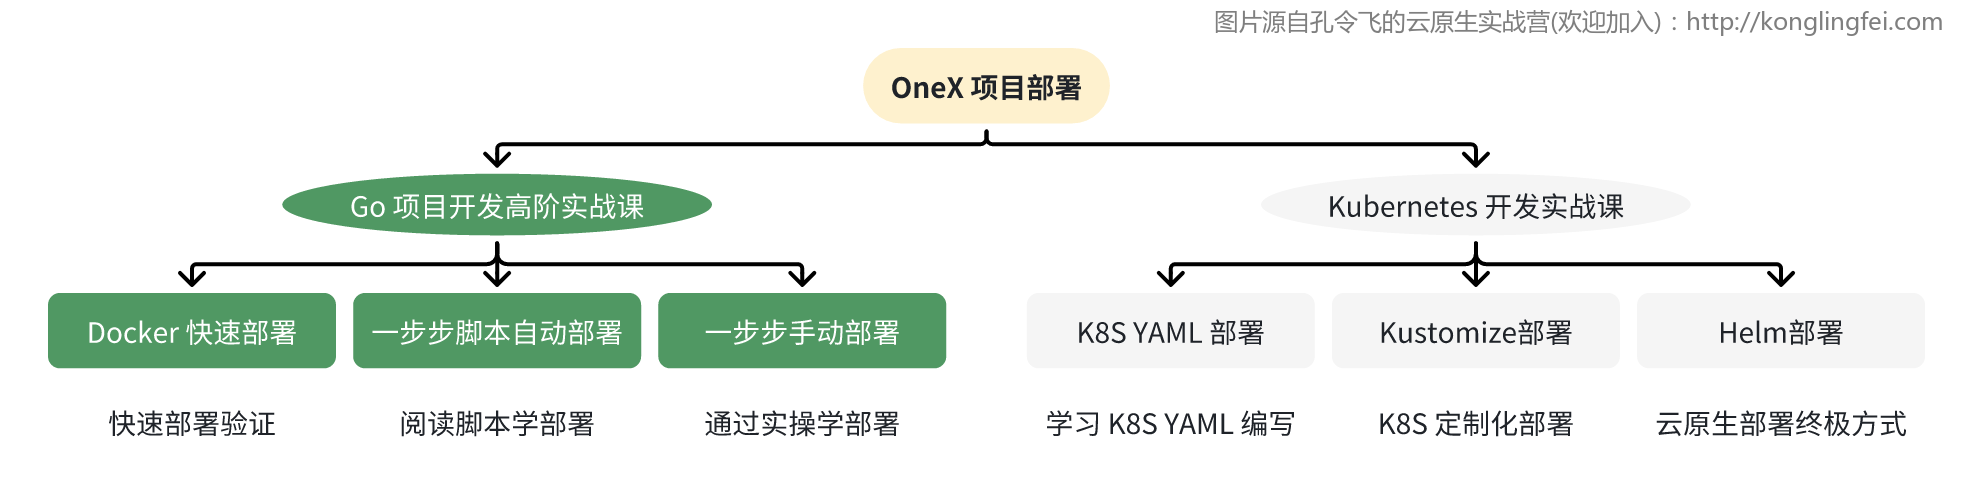 OneX项目部署方式